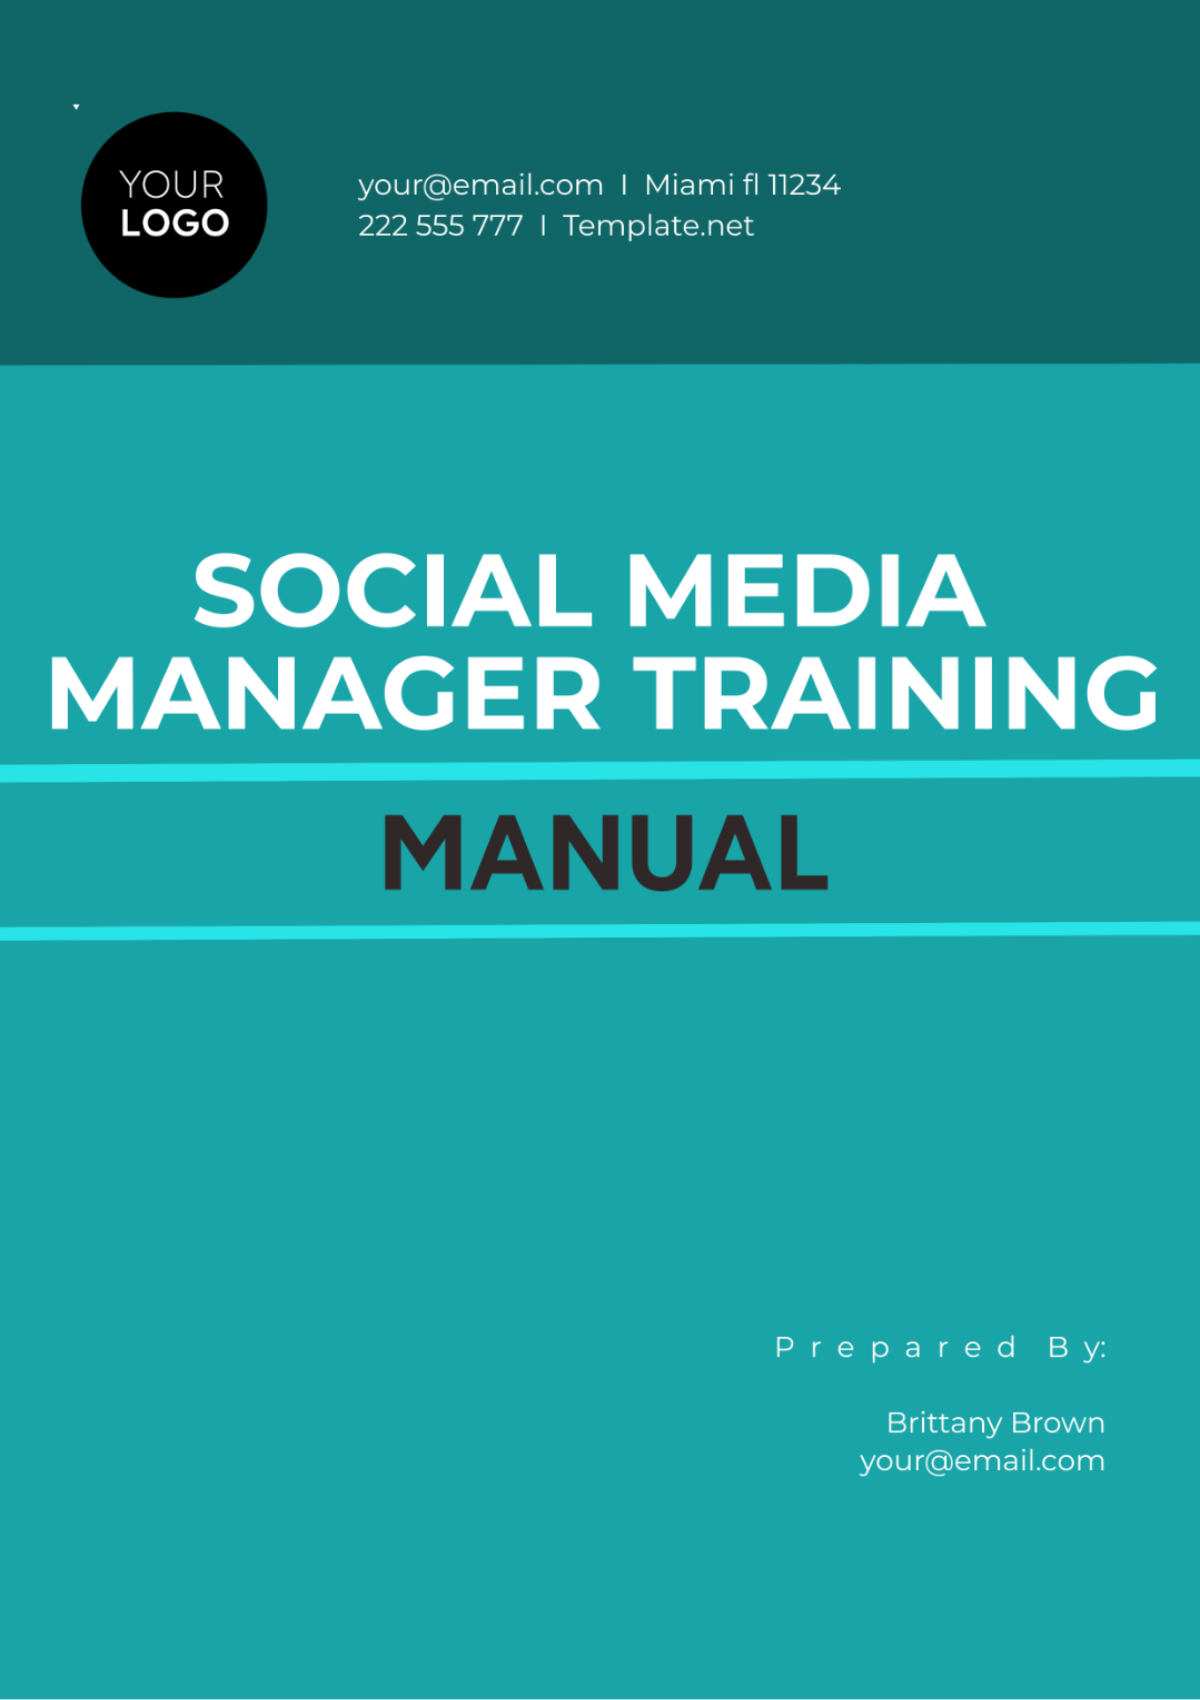 Social Media Manager Training Manual Template